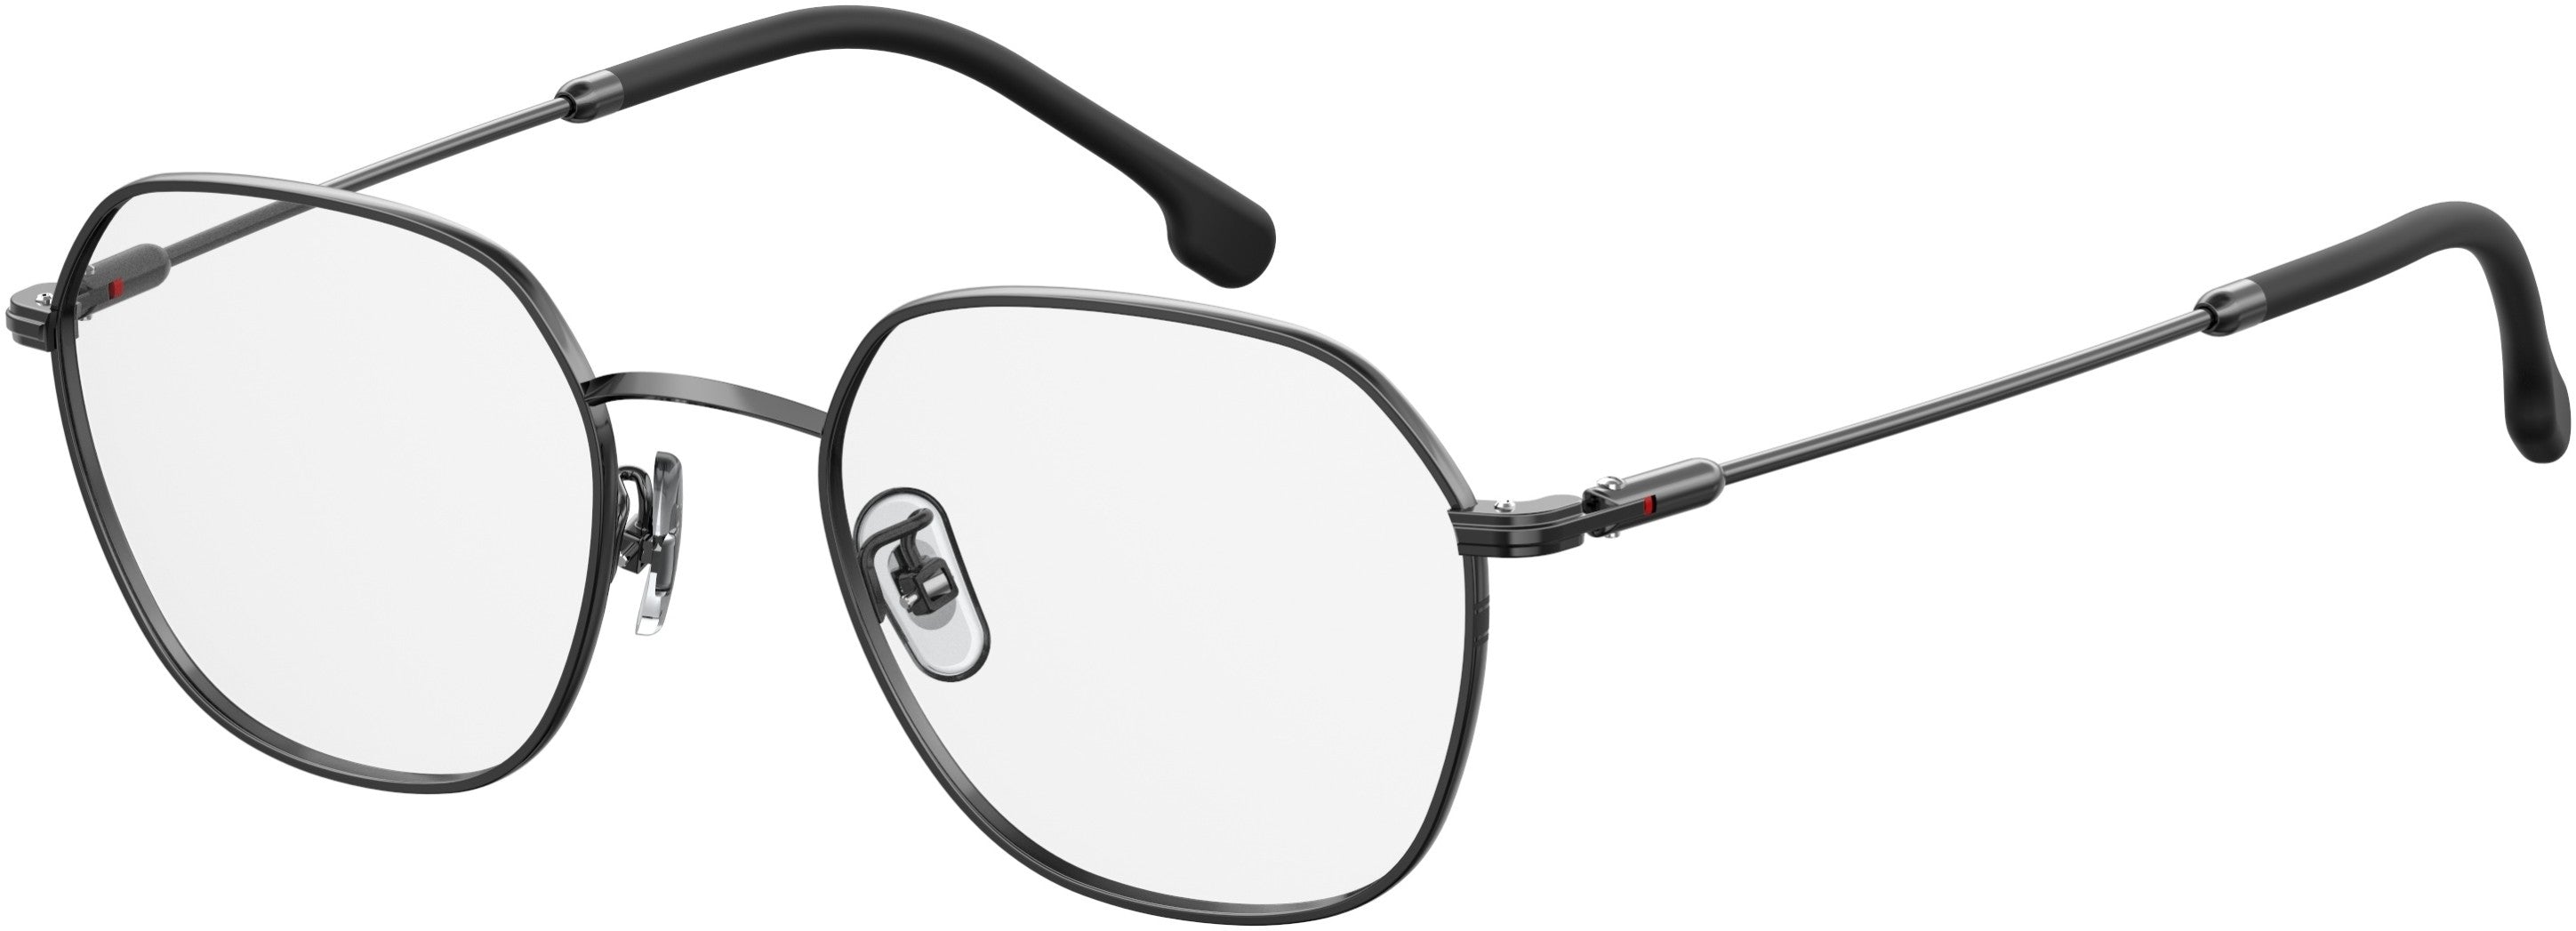  Carrera 180/F Geometric Eyeglasses 0V81-0V81  Dark Ruthenium Black (00 Demo Lens)